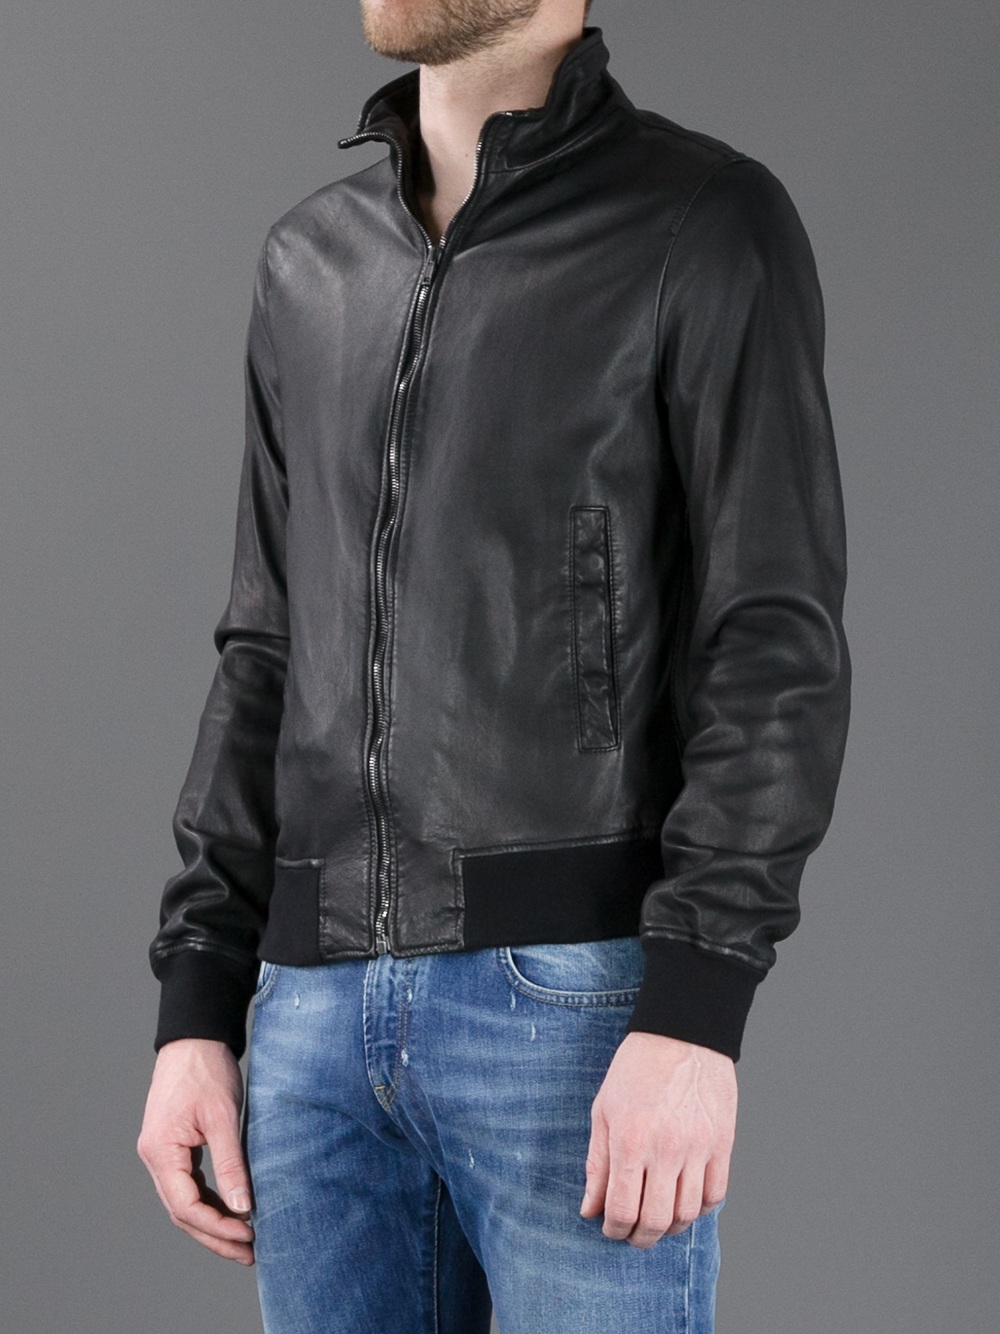 Dolce & gabbana Leather Jacket in Black for Men | Lyst